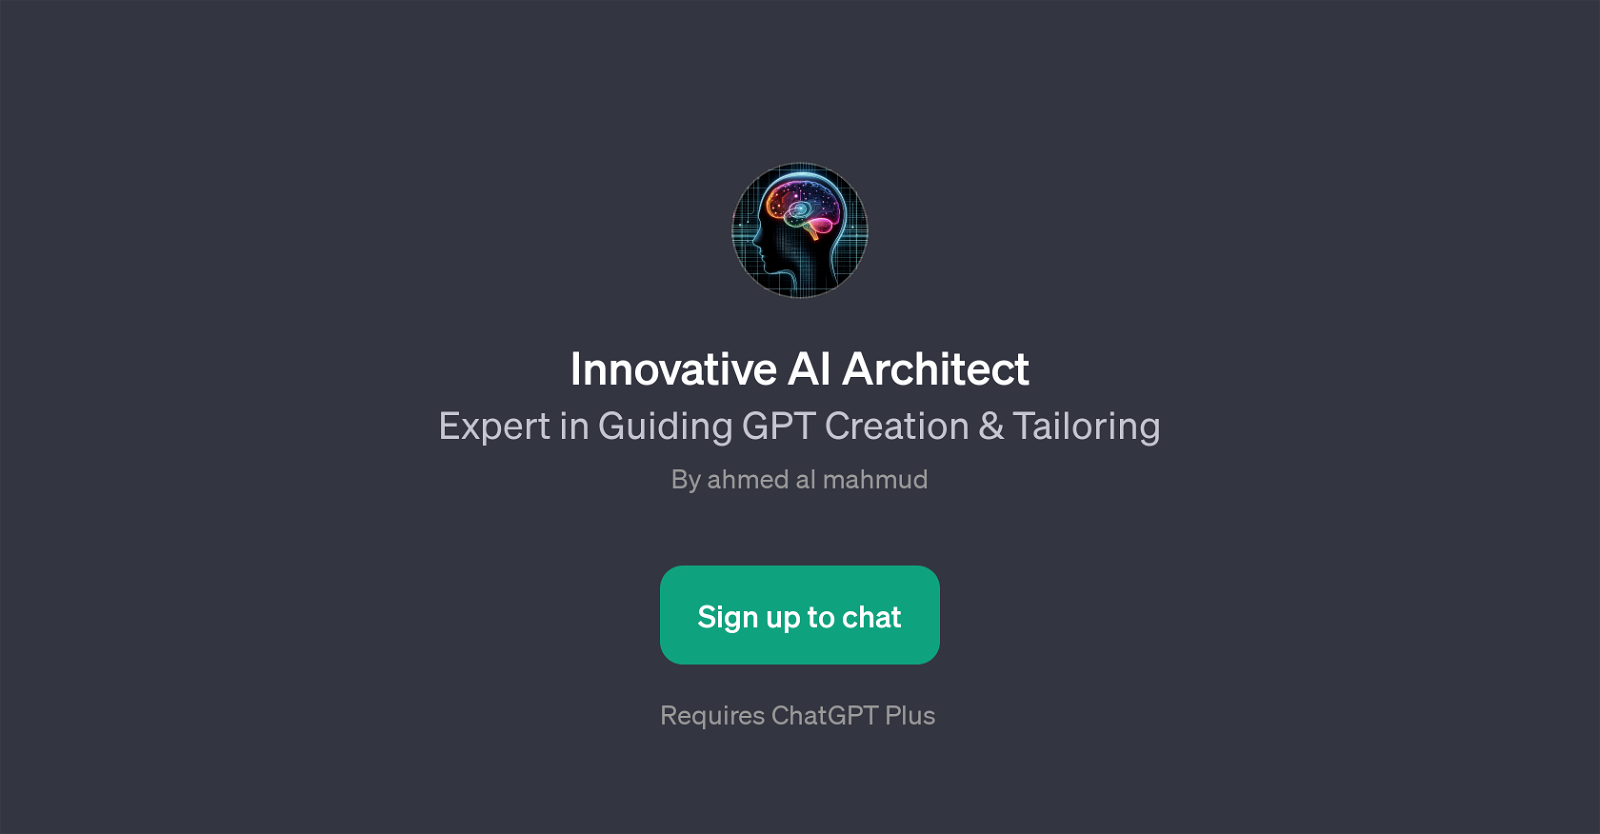 Innovative AI Architect website